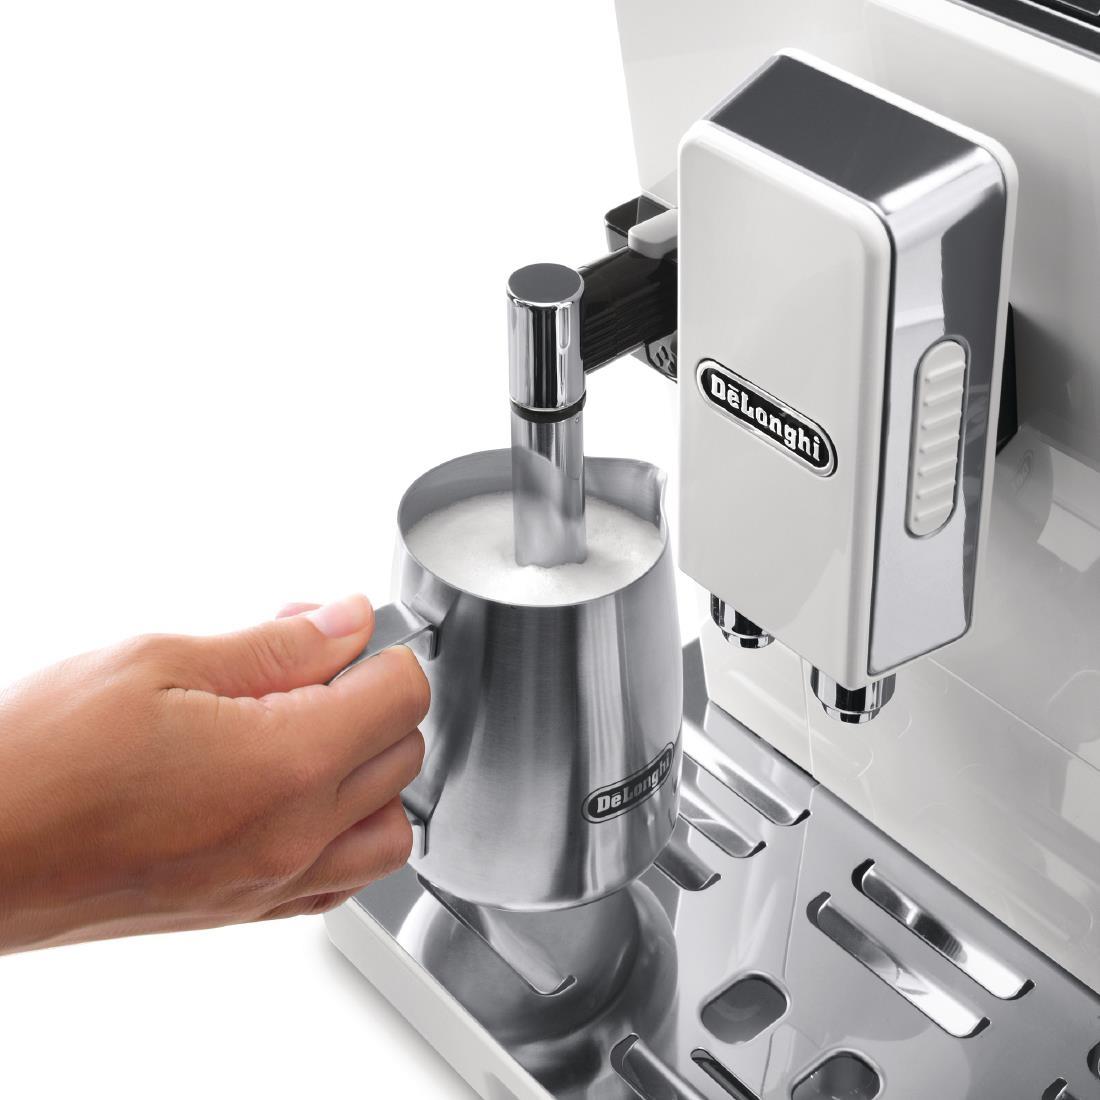 DeLonghi Eletta Bean to Cup Coffee Maker ECAM45.760.W